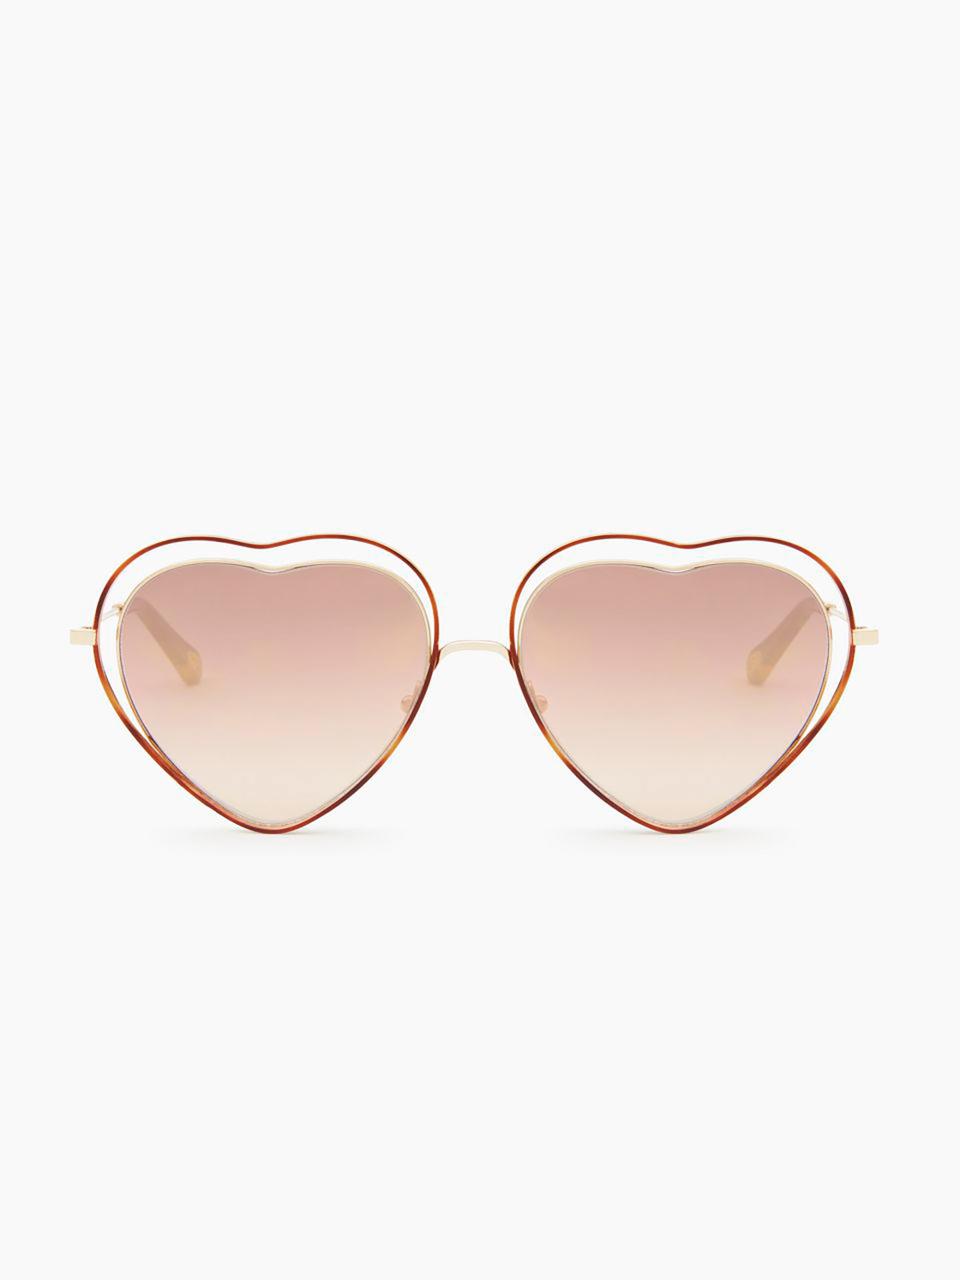 Chloé heart-shaped sunglasses (£265)